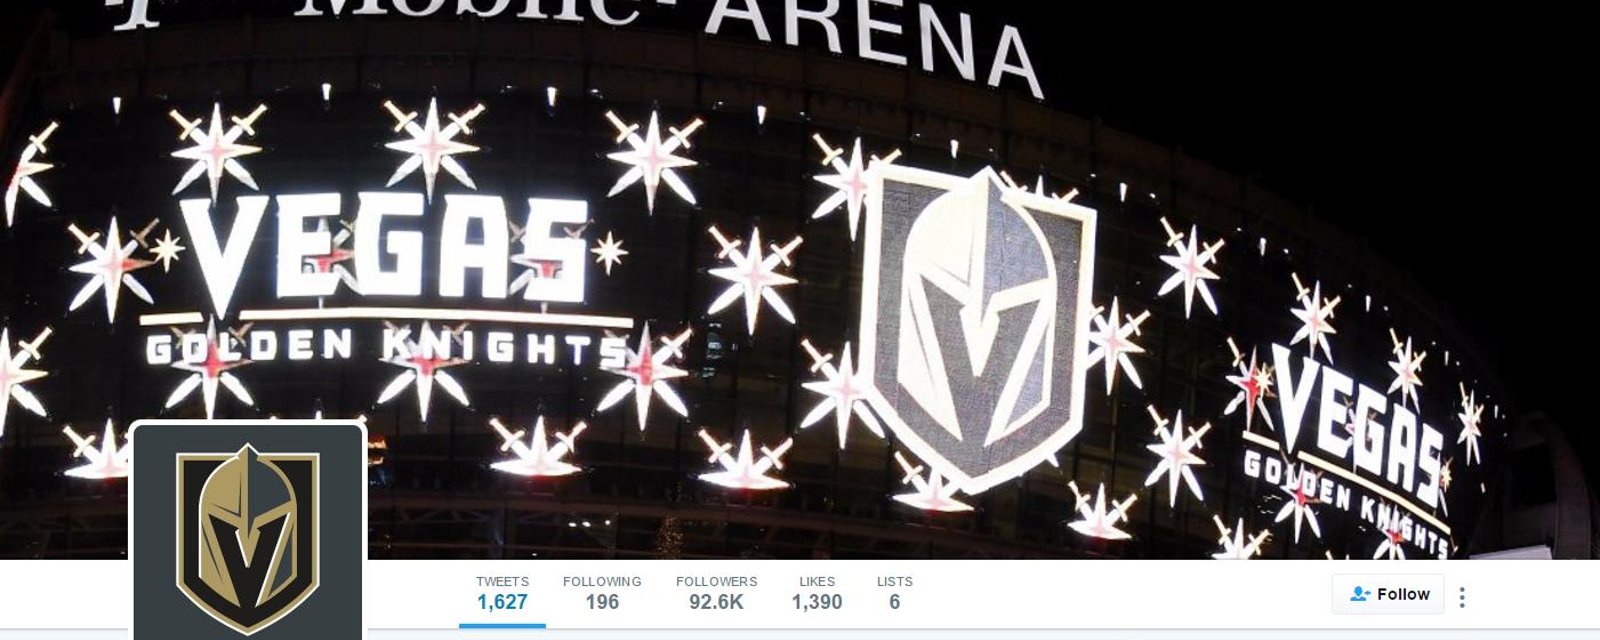 Vegas Golden Knights' Twitter account already killing it! 